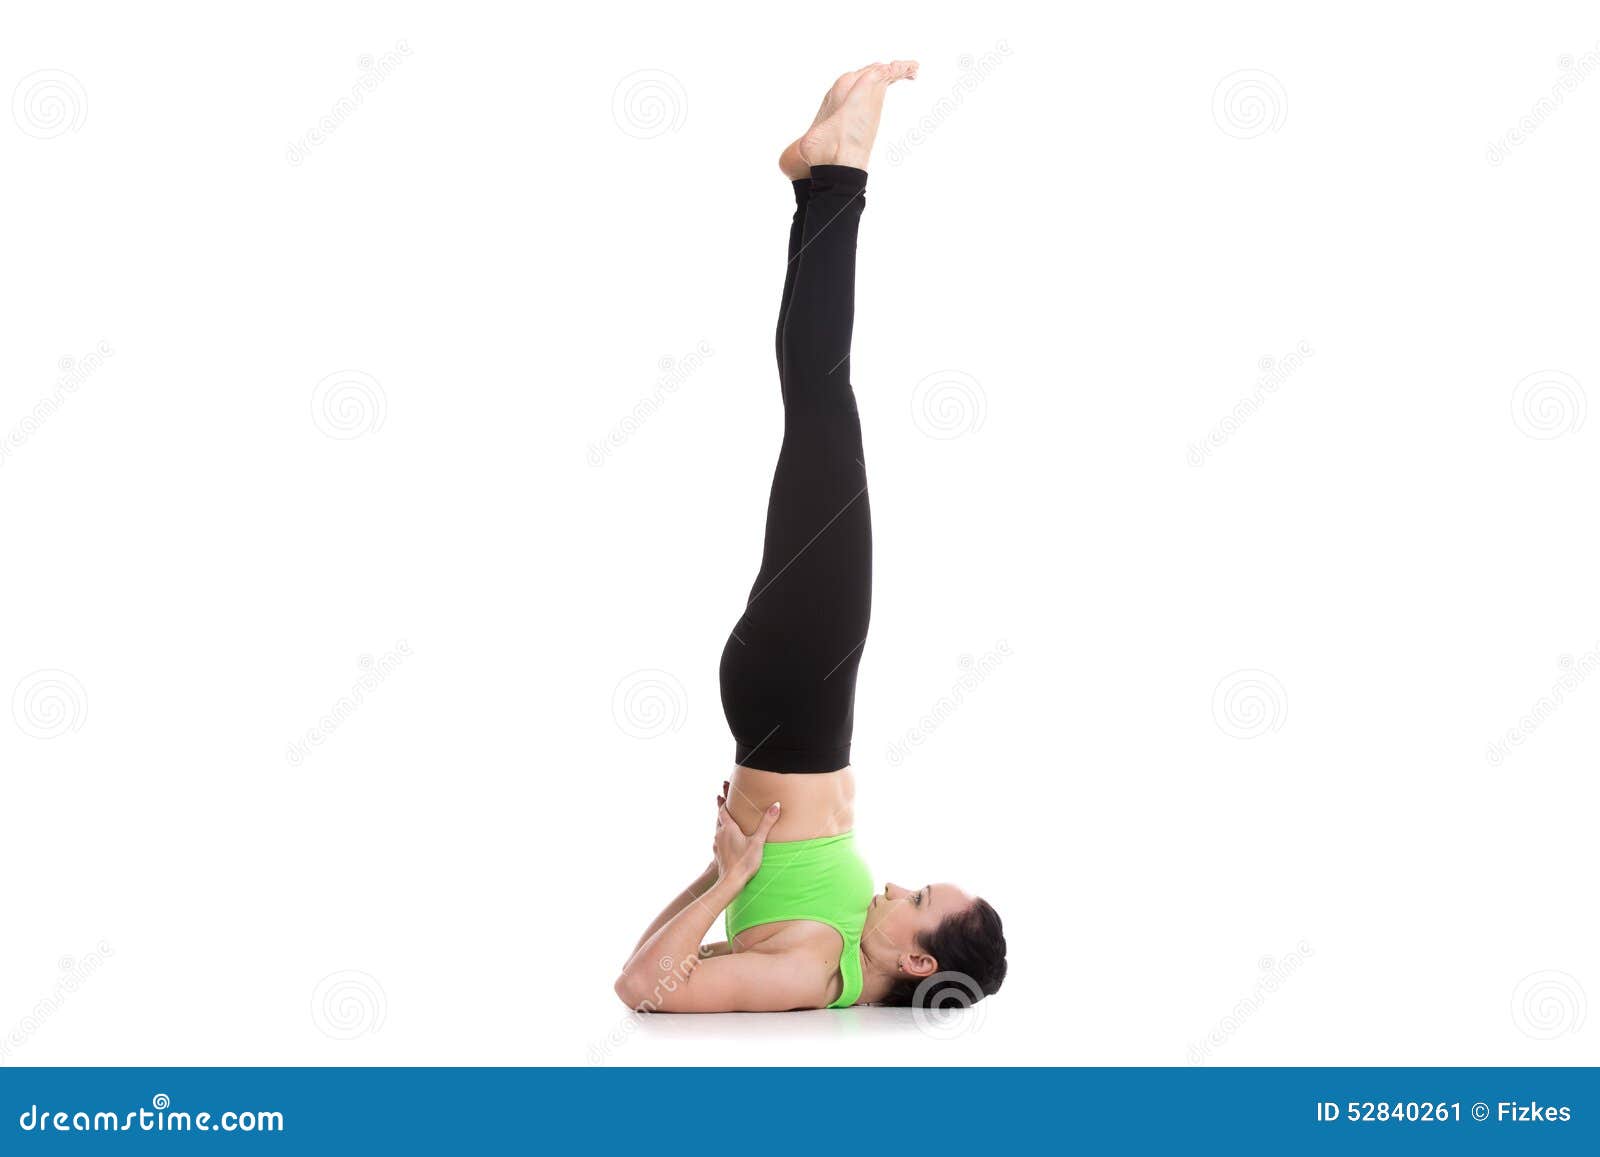 supported-shoulderstand-yoga-asana-beaut